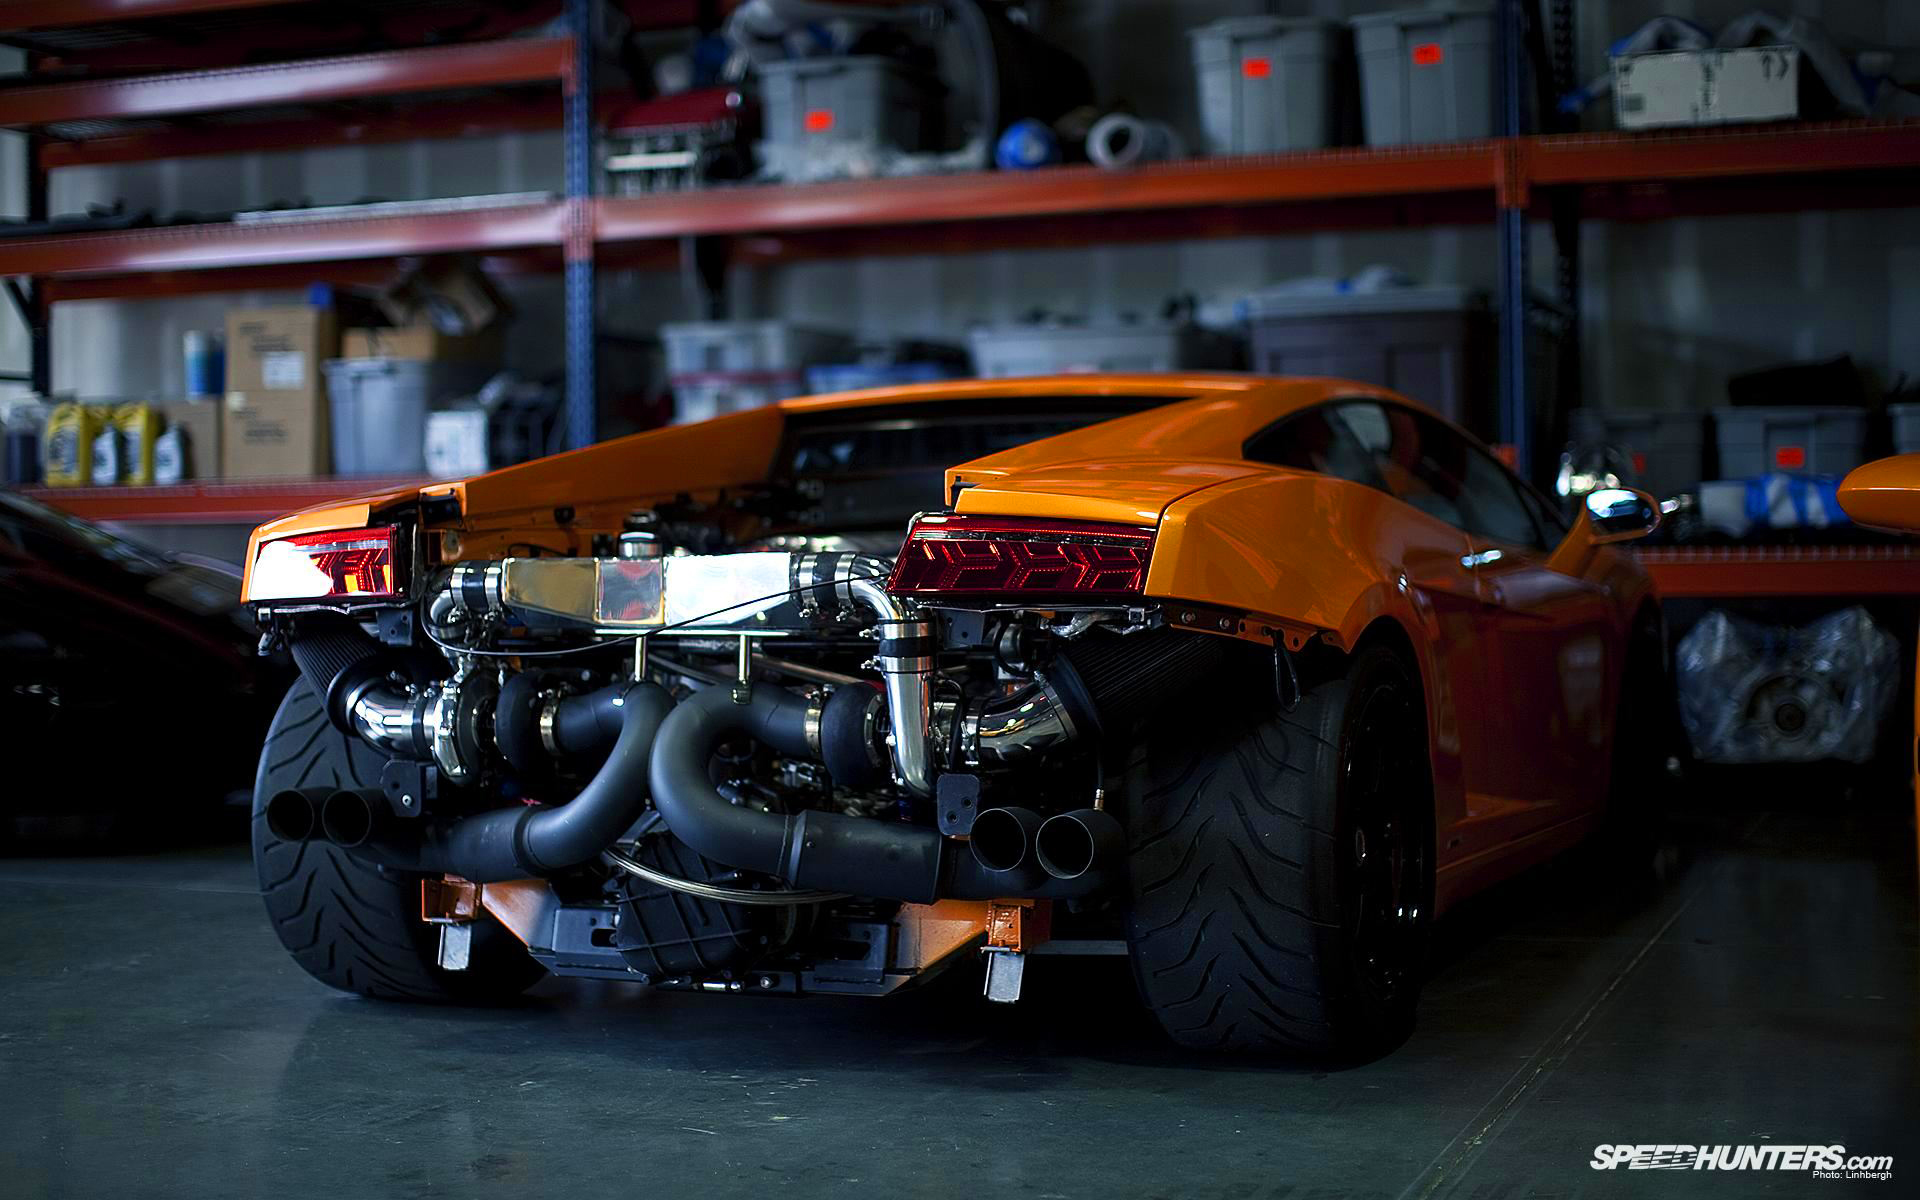 Rear View of Lamborghini engine